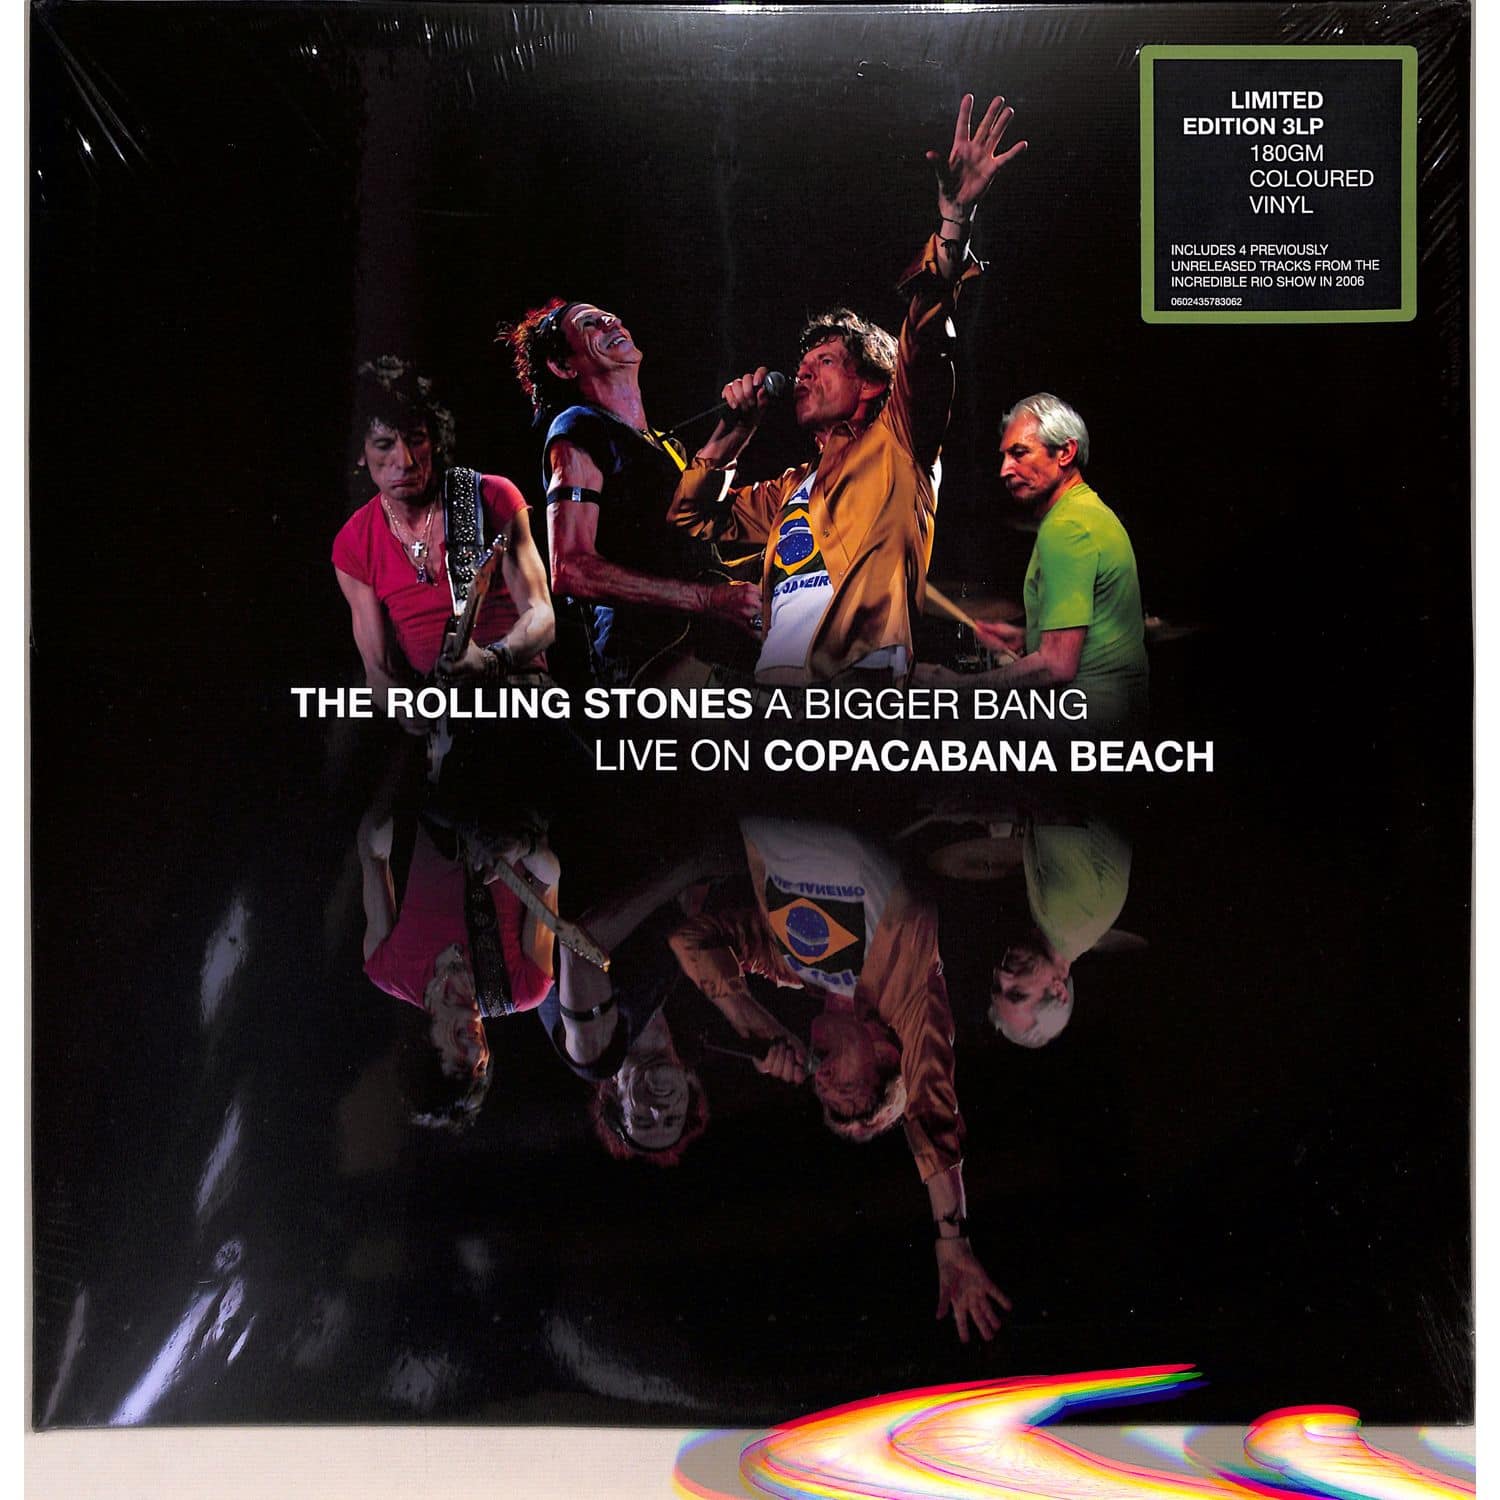 The Rolling Stones - A BIGGER BANG - LIVE ON COPACABANA BEACH 